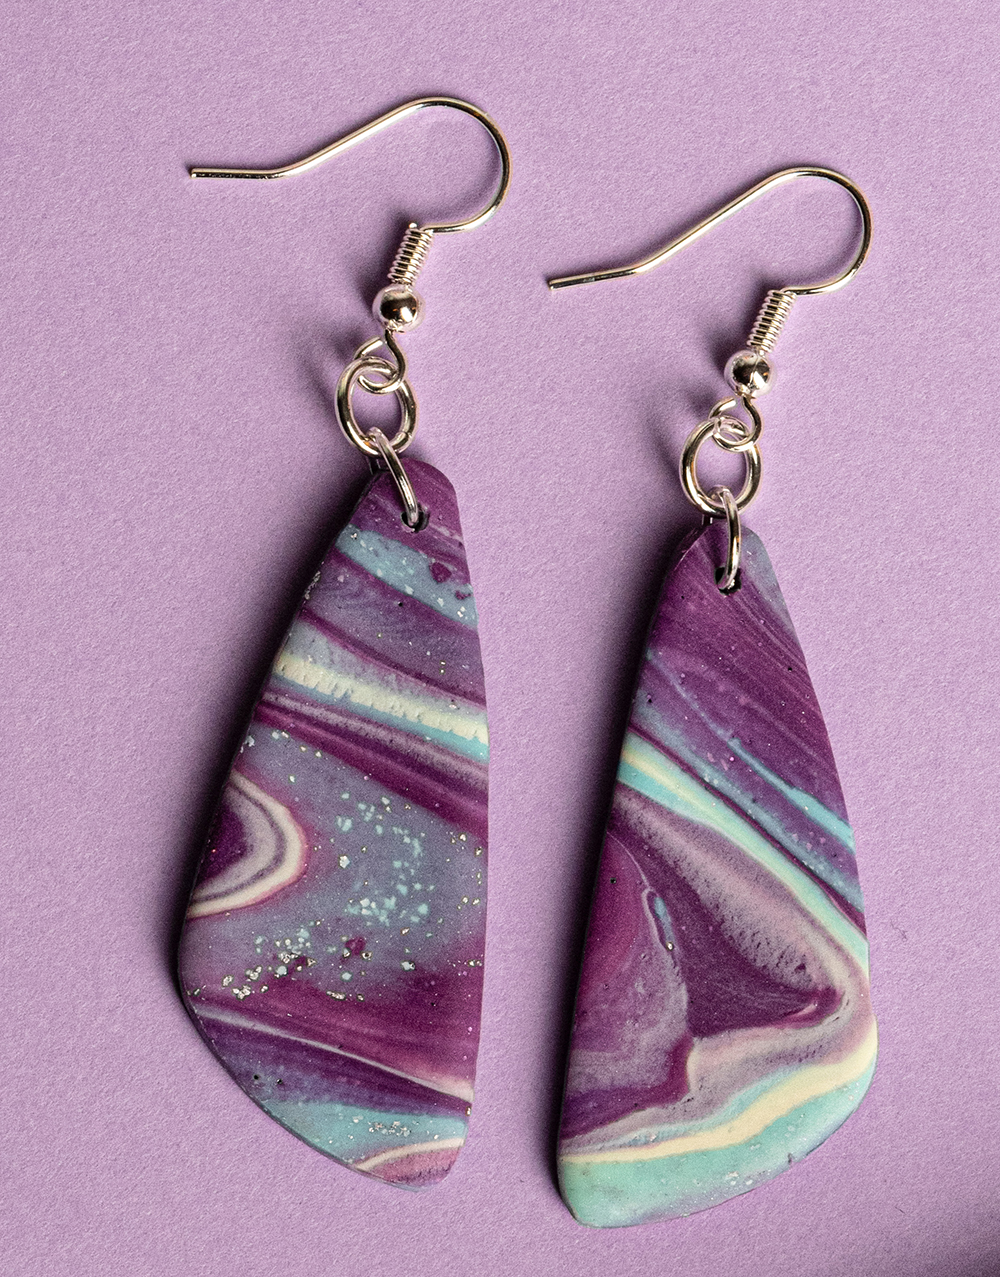 Purple, blue and teal earrings